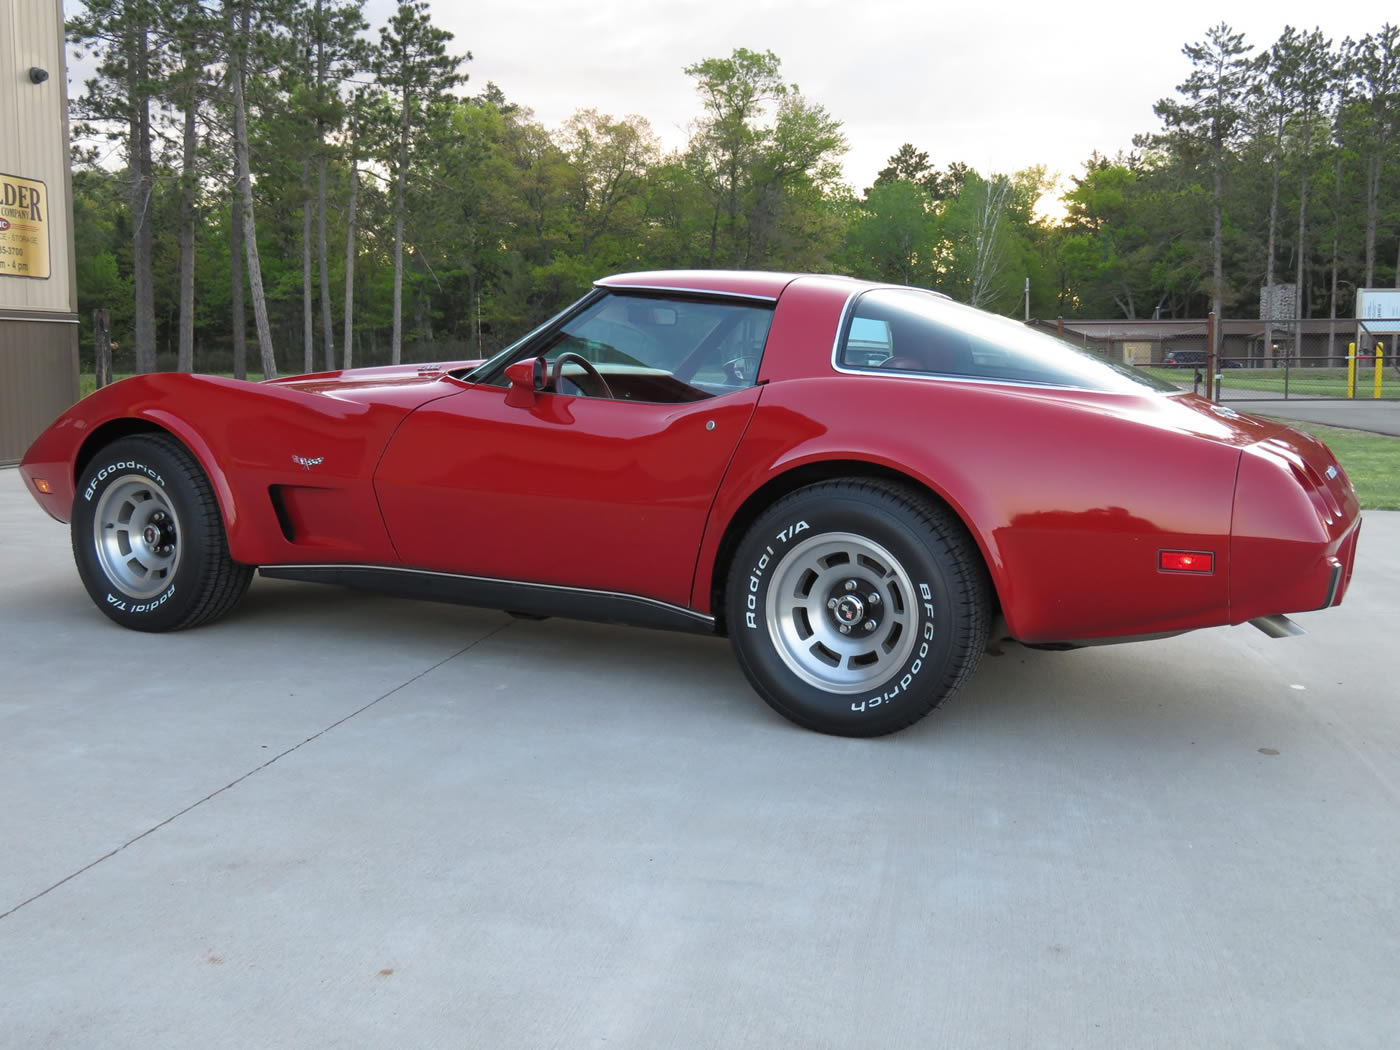 1978 Corvette in Corvette Red